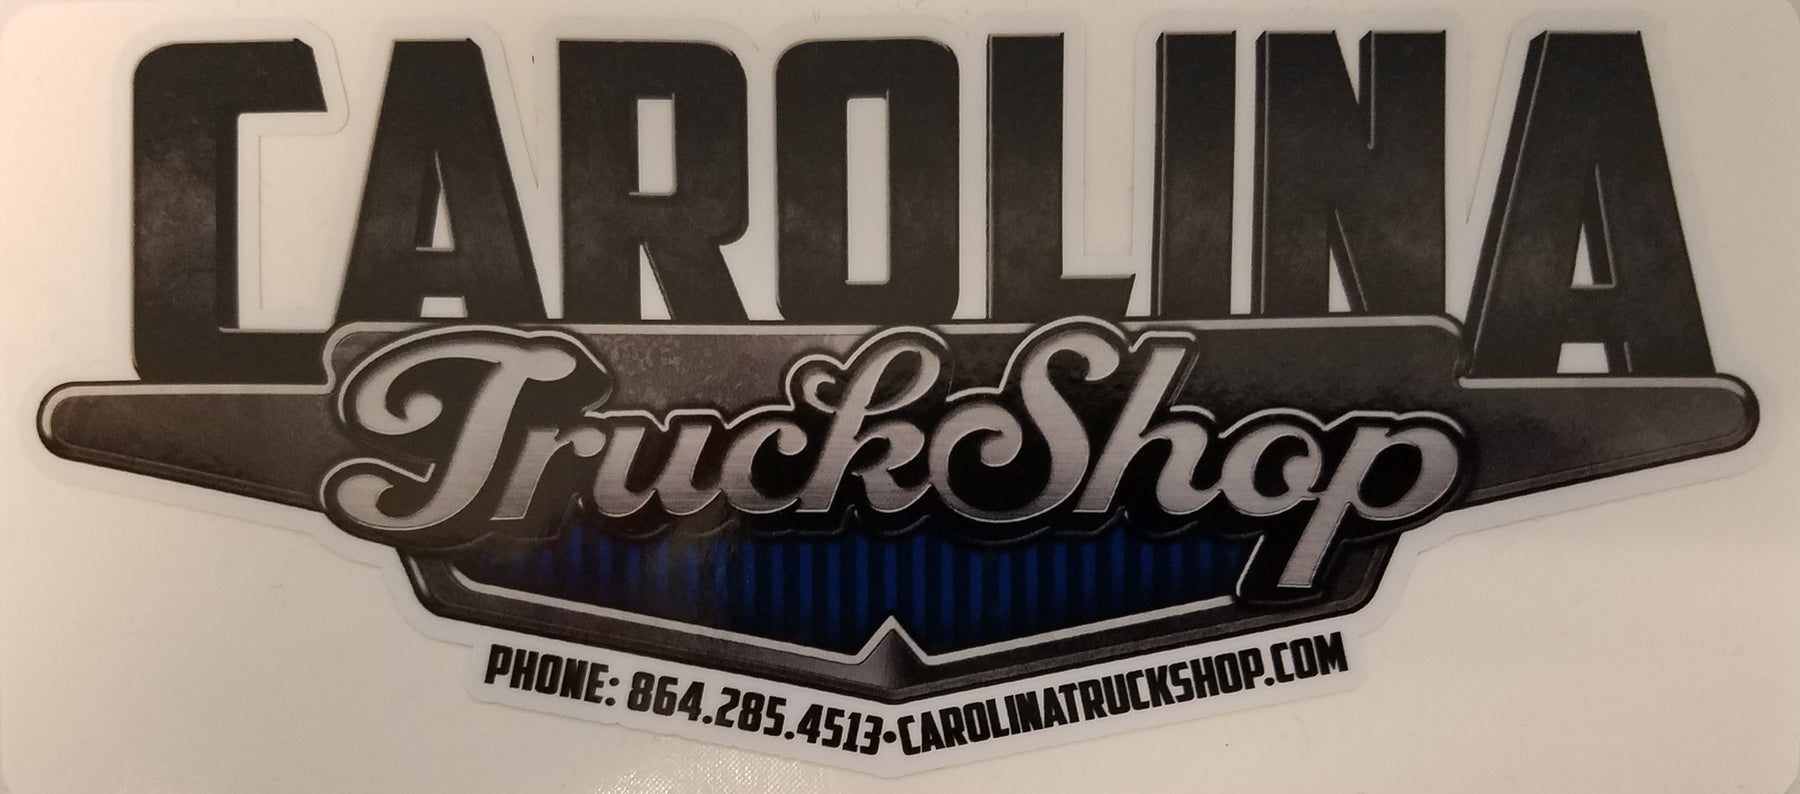 Carolina Truck Shop Decal - Medium Size